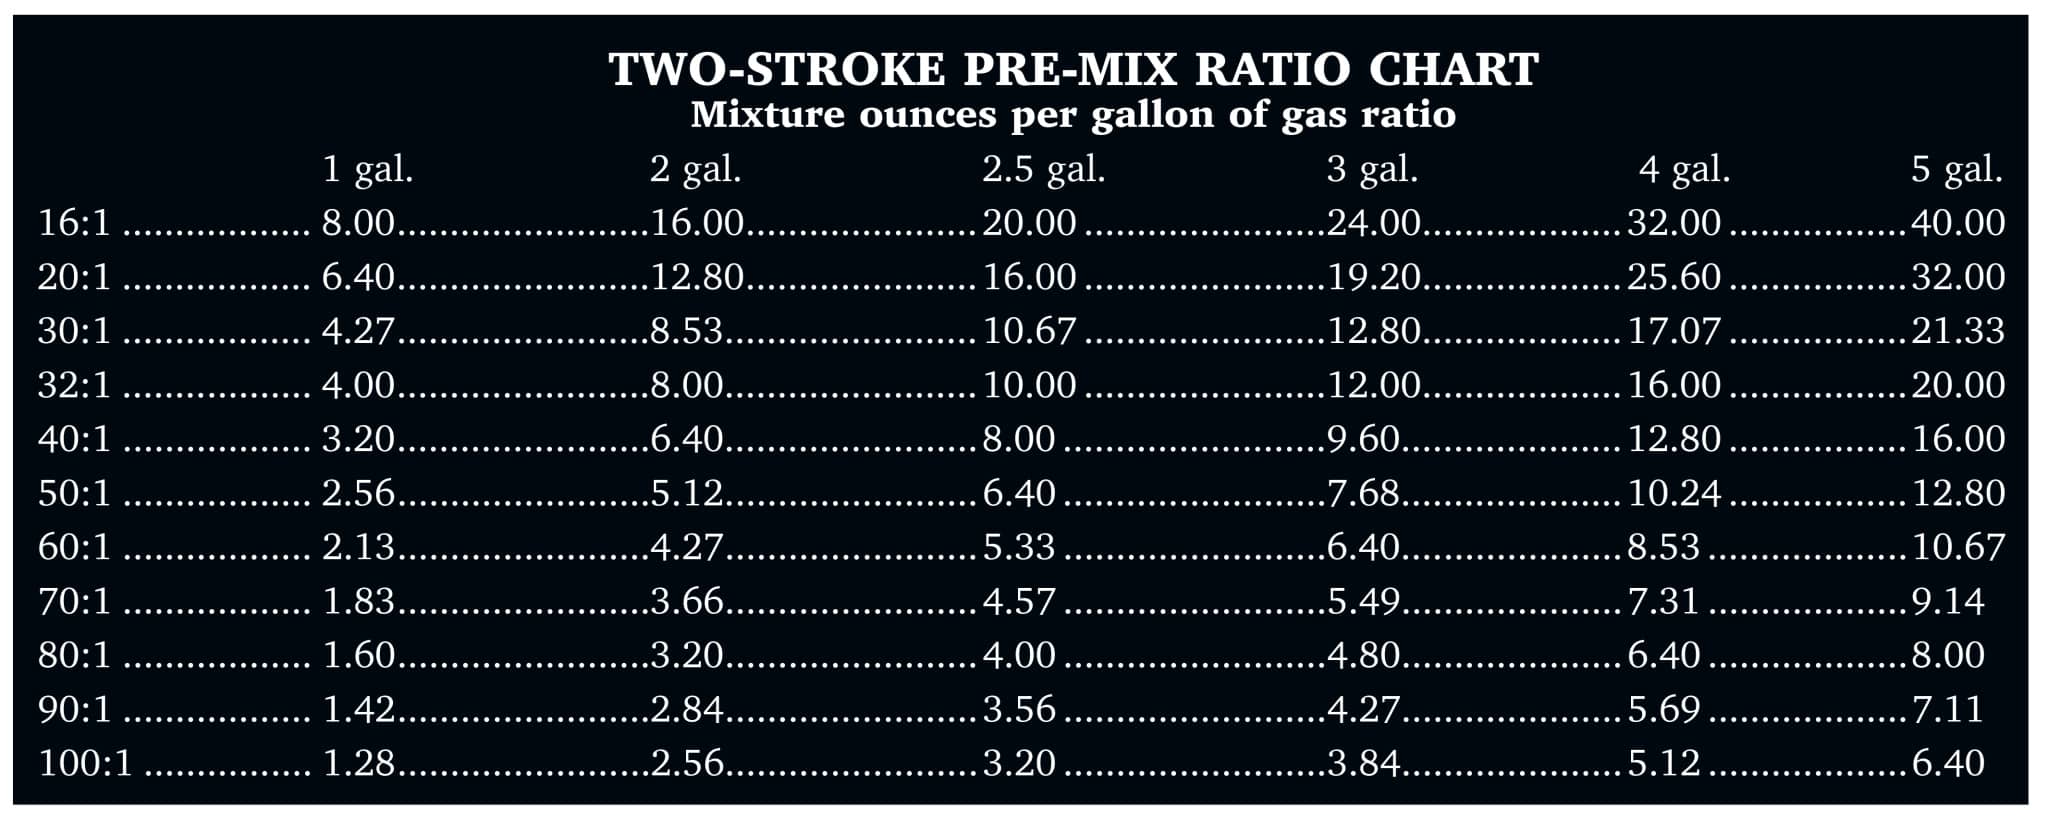 Measuring Cup, 2-Stroke Pre-Mix, Ratio Rite